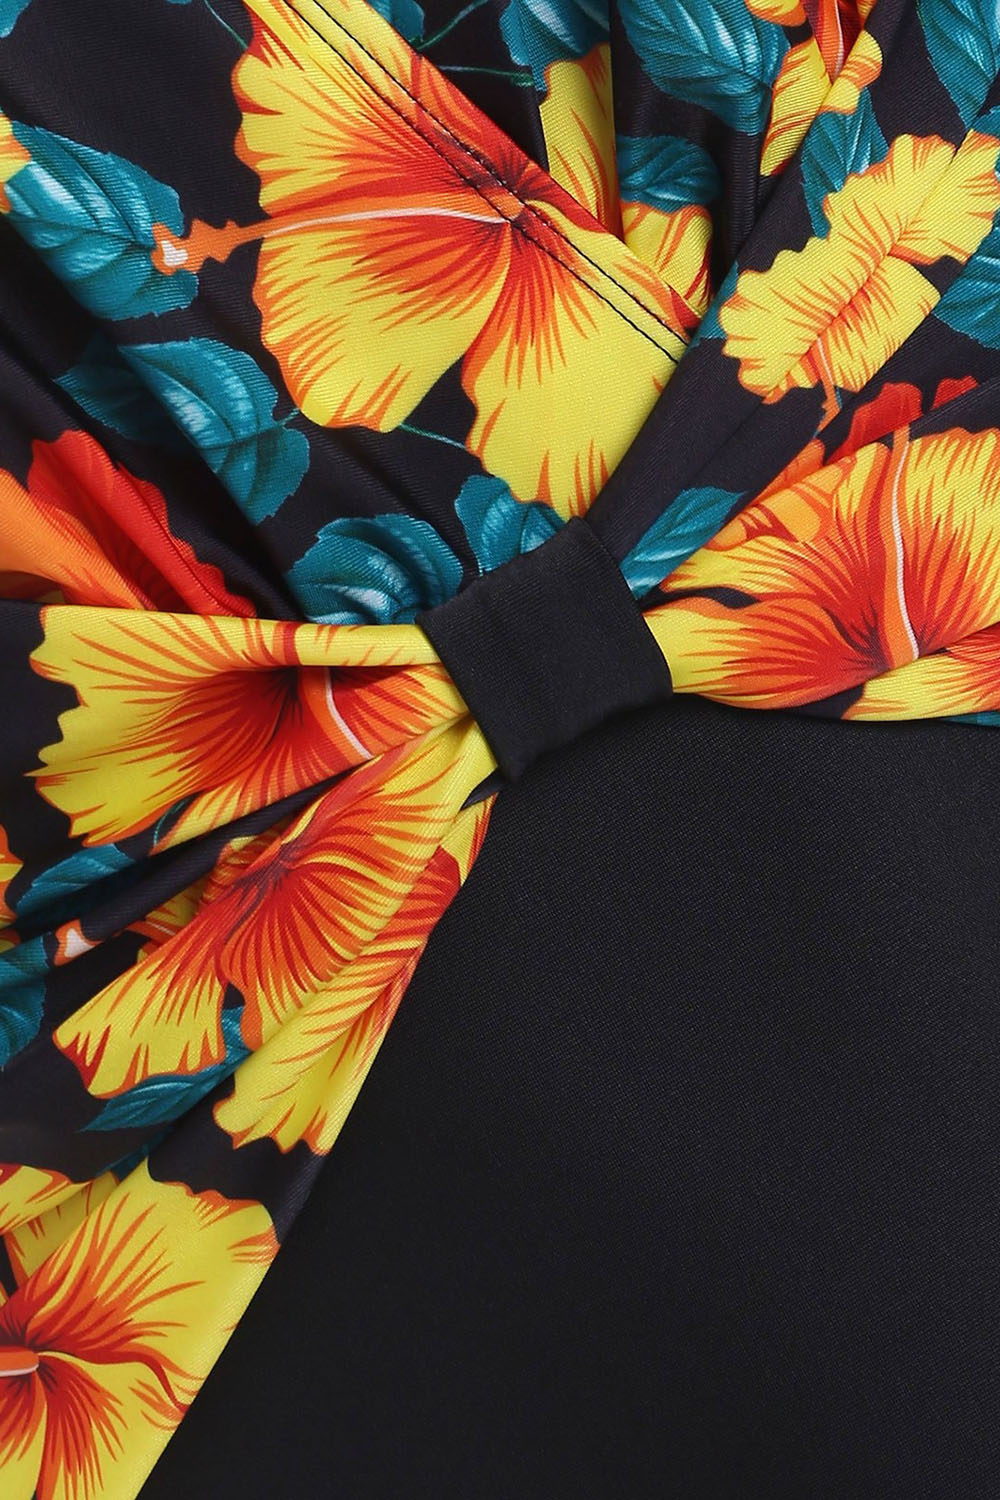 Halter Floral Bow Surplice One-piece Swimsuit